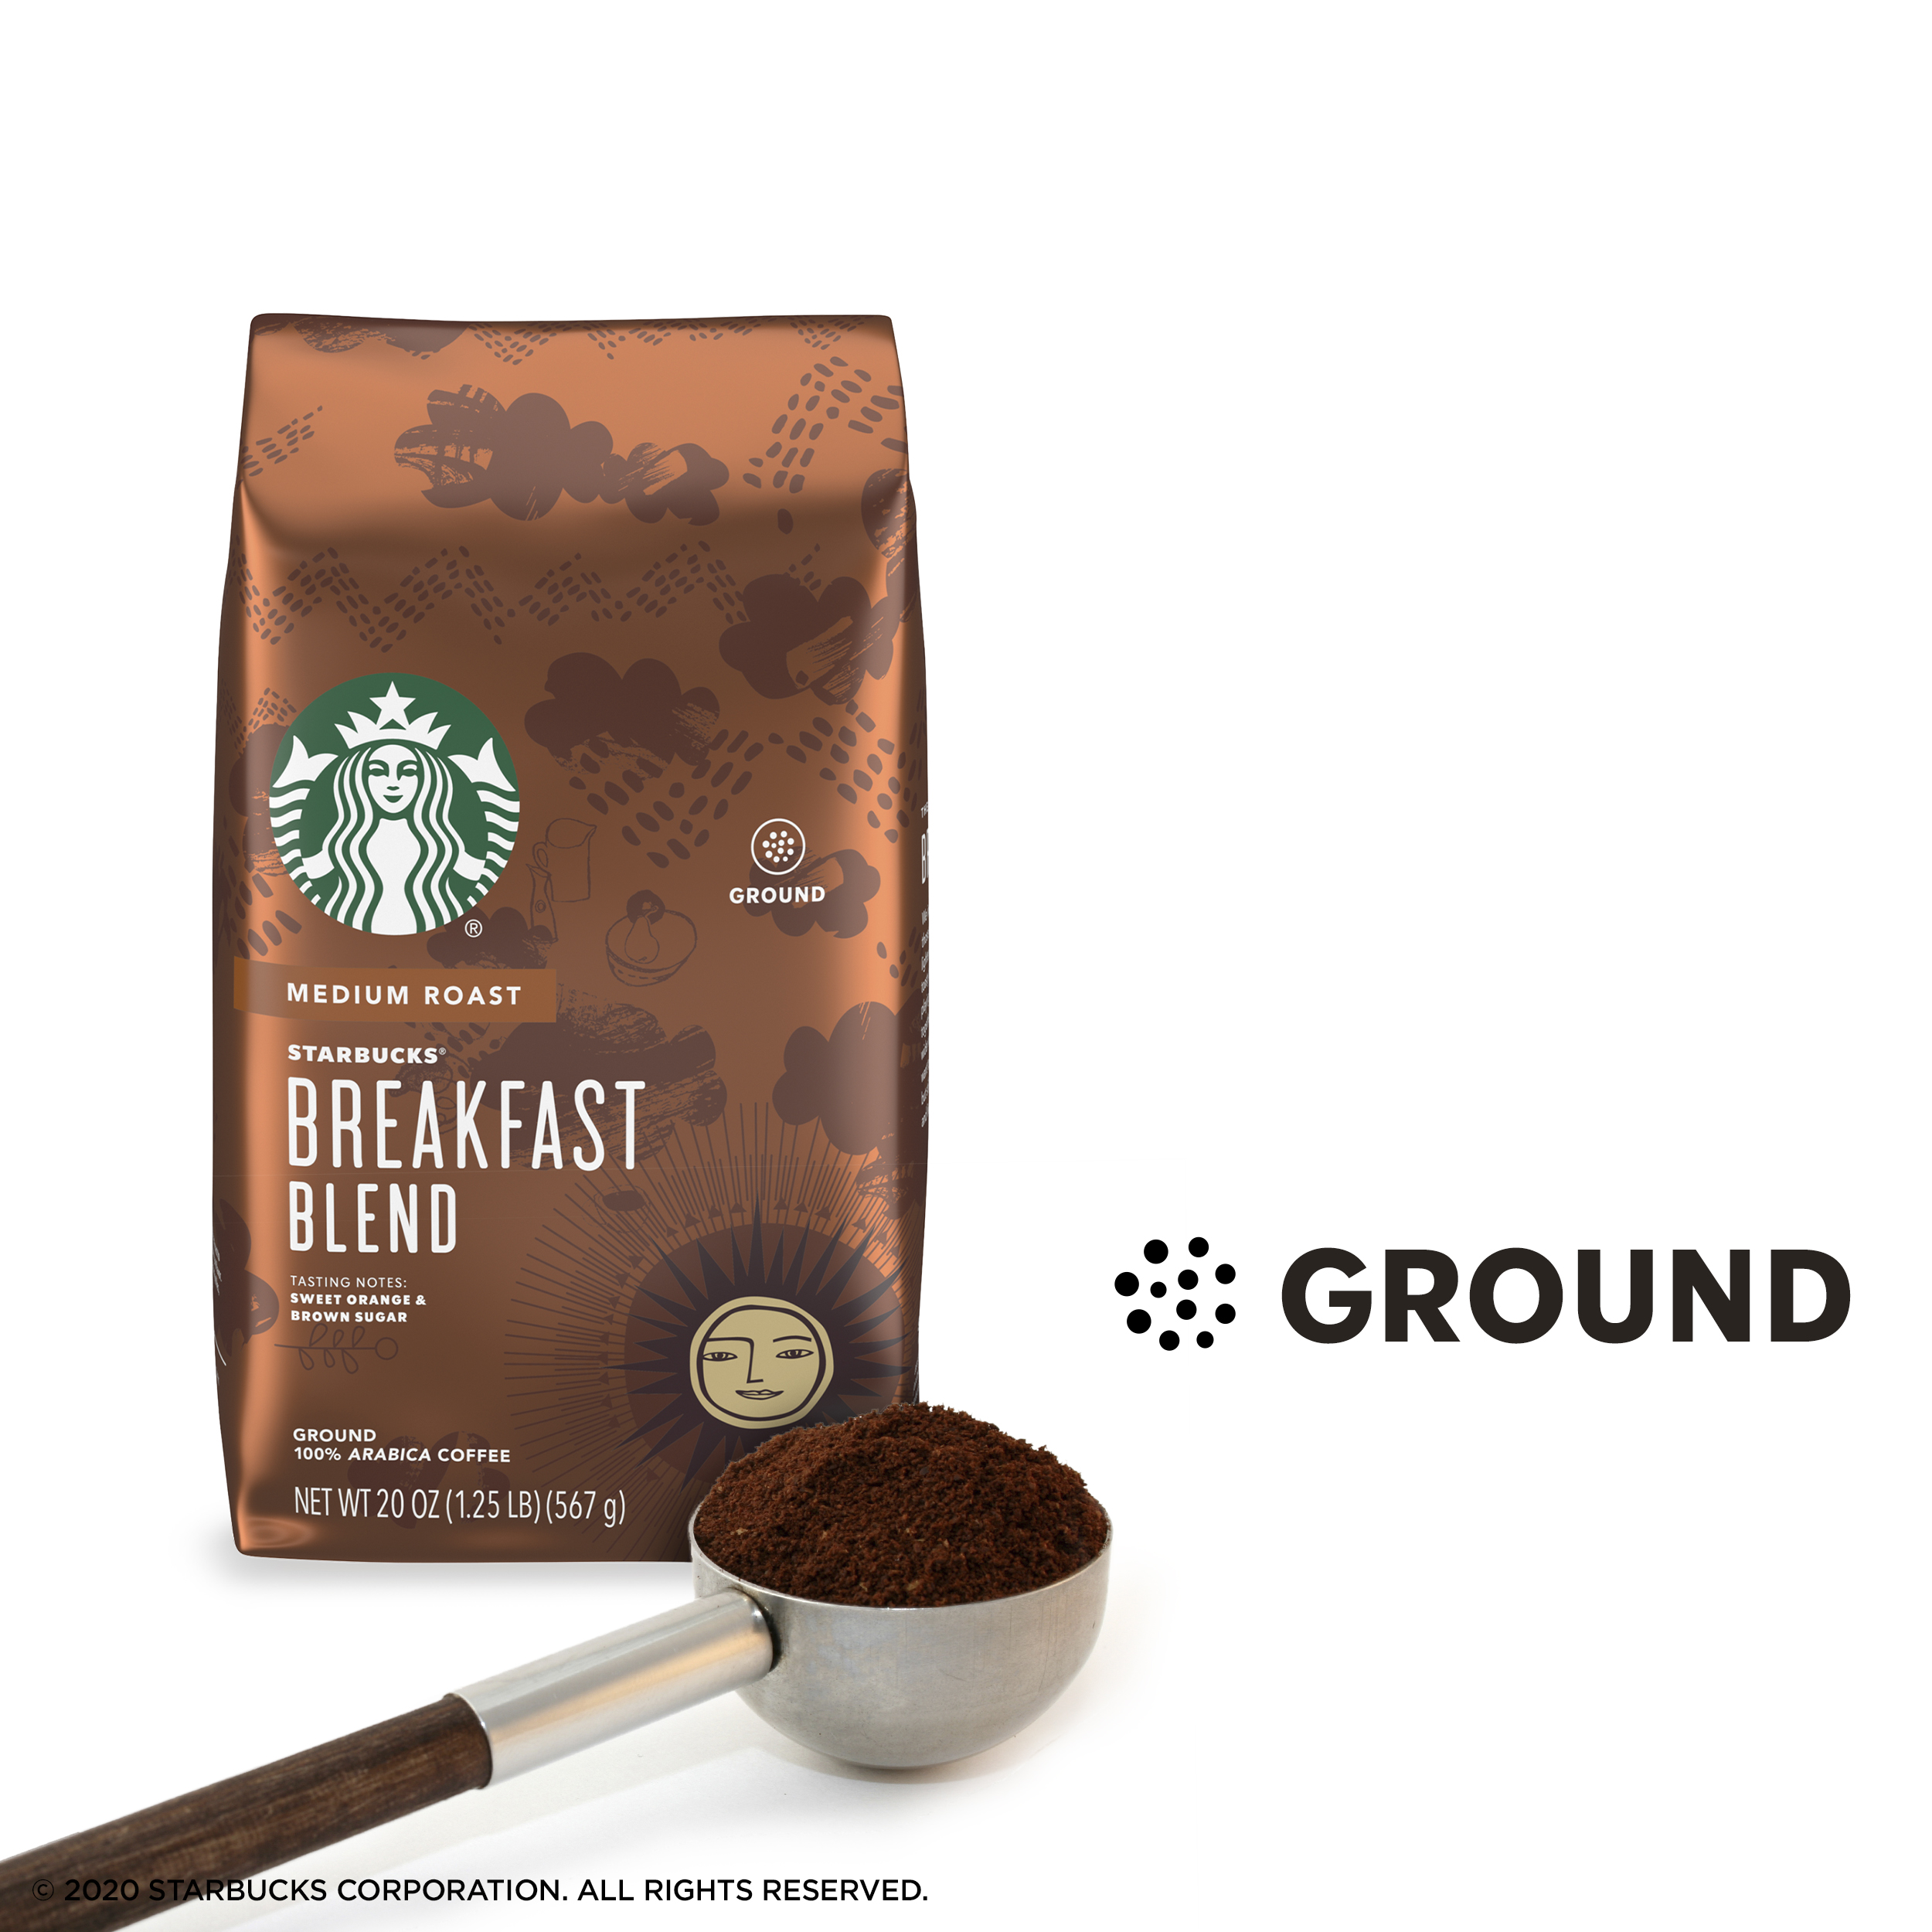 Starbucks Medium Roast Ground Coffee — Breakfast Blend — 100% Arabica — 1 bag (20 oz.) - image 3 of 6